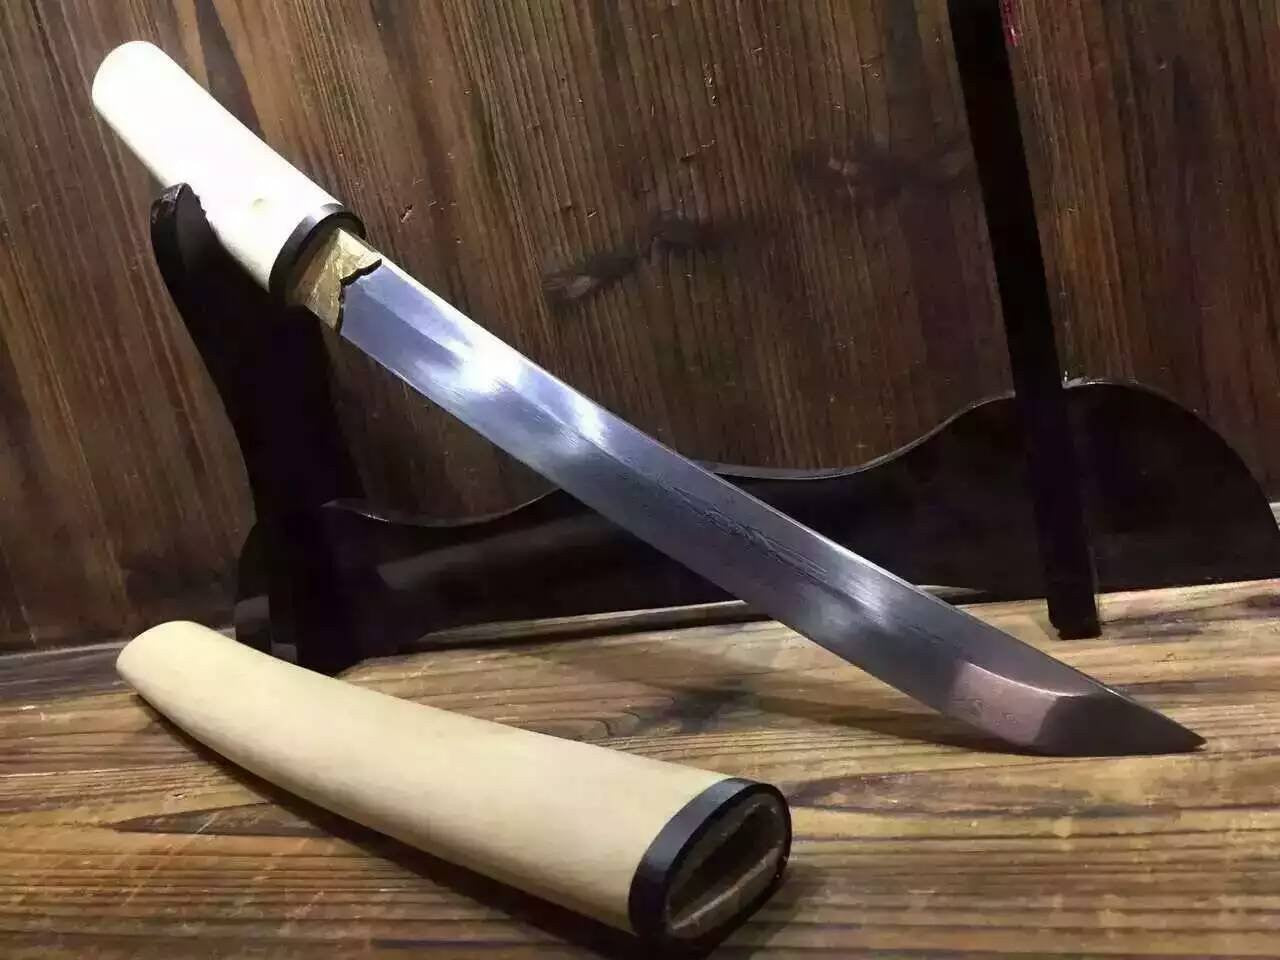 Wakizashi/Japanese sword/Damascus steel blade/Wood Scabbard/Length 20" - Chinese sword shop